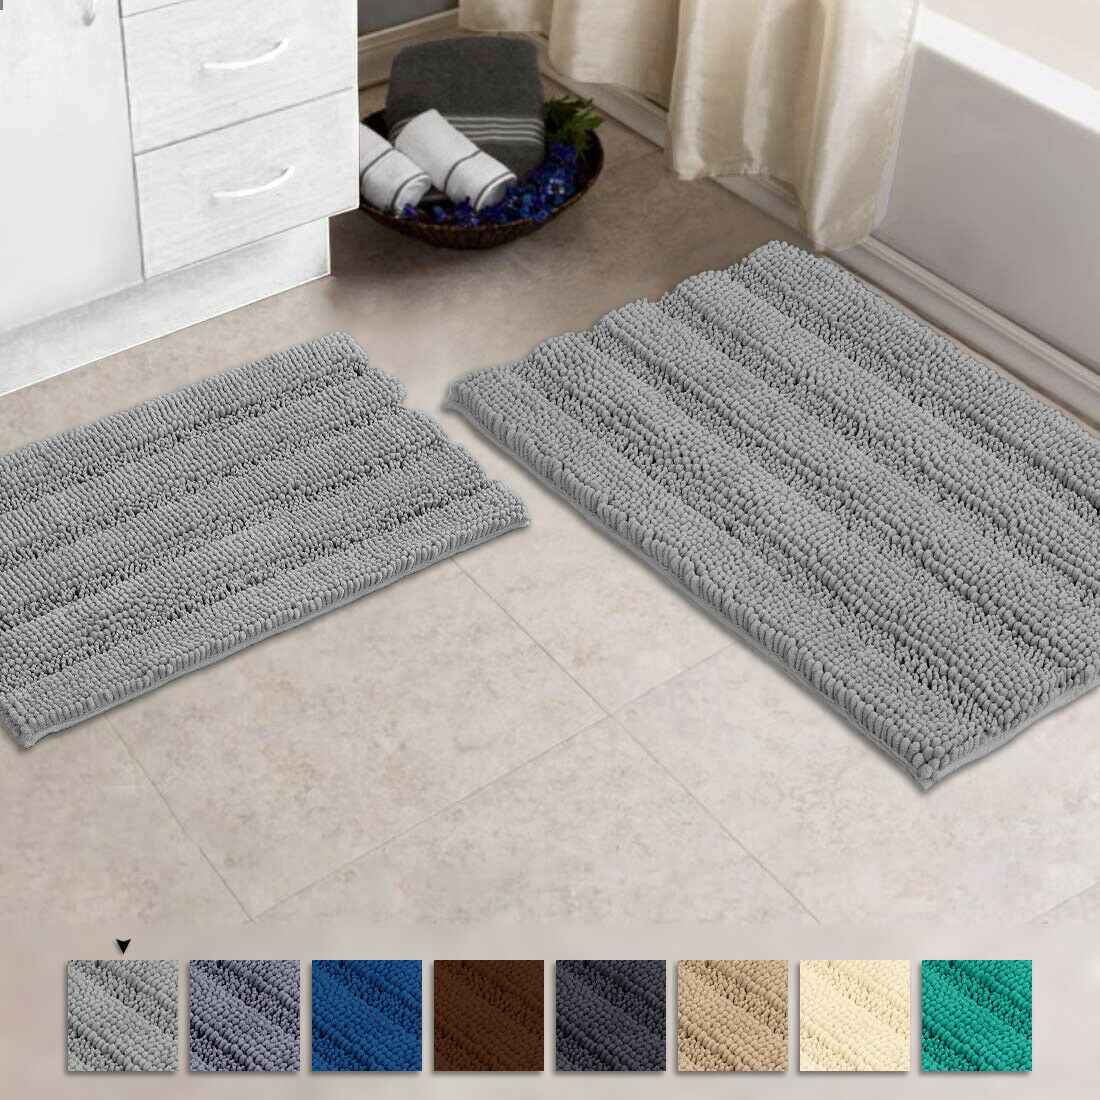 15X23" Paris Eiffel Tower Kitchen Bathroom Floor Non-Slip Bath Mat Rug Carpet 